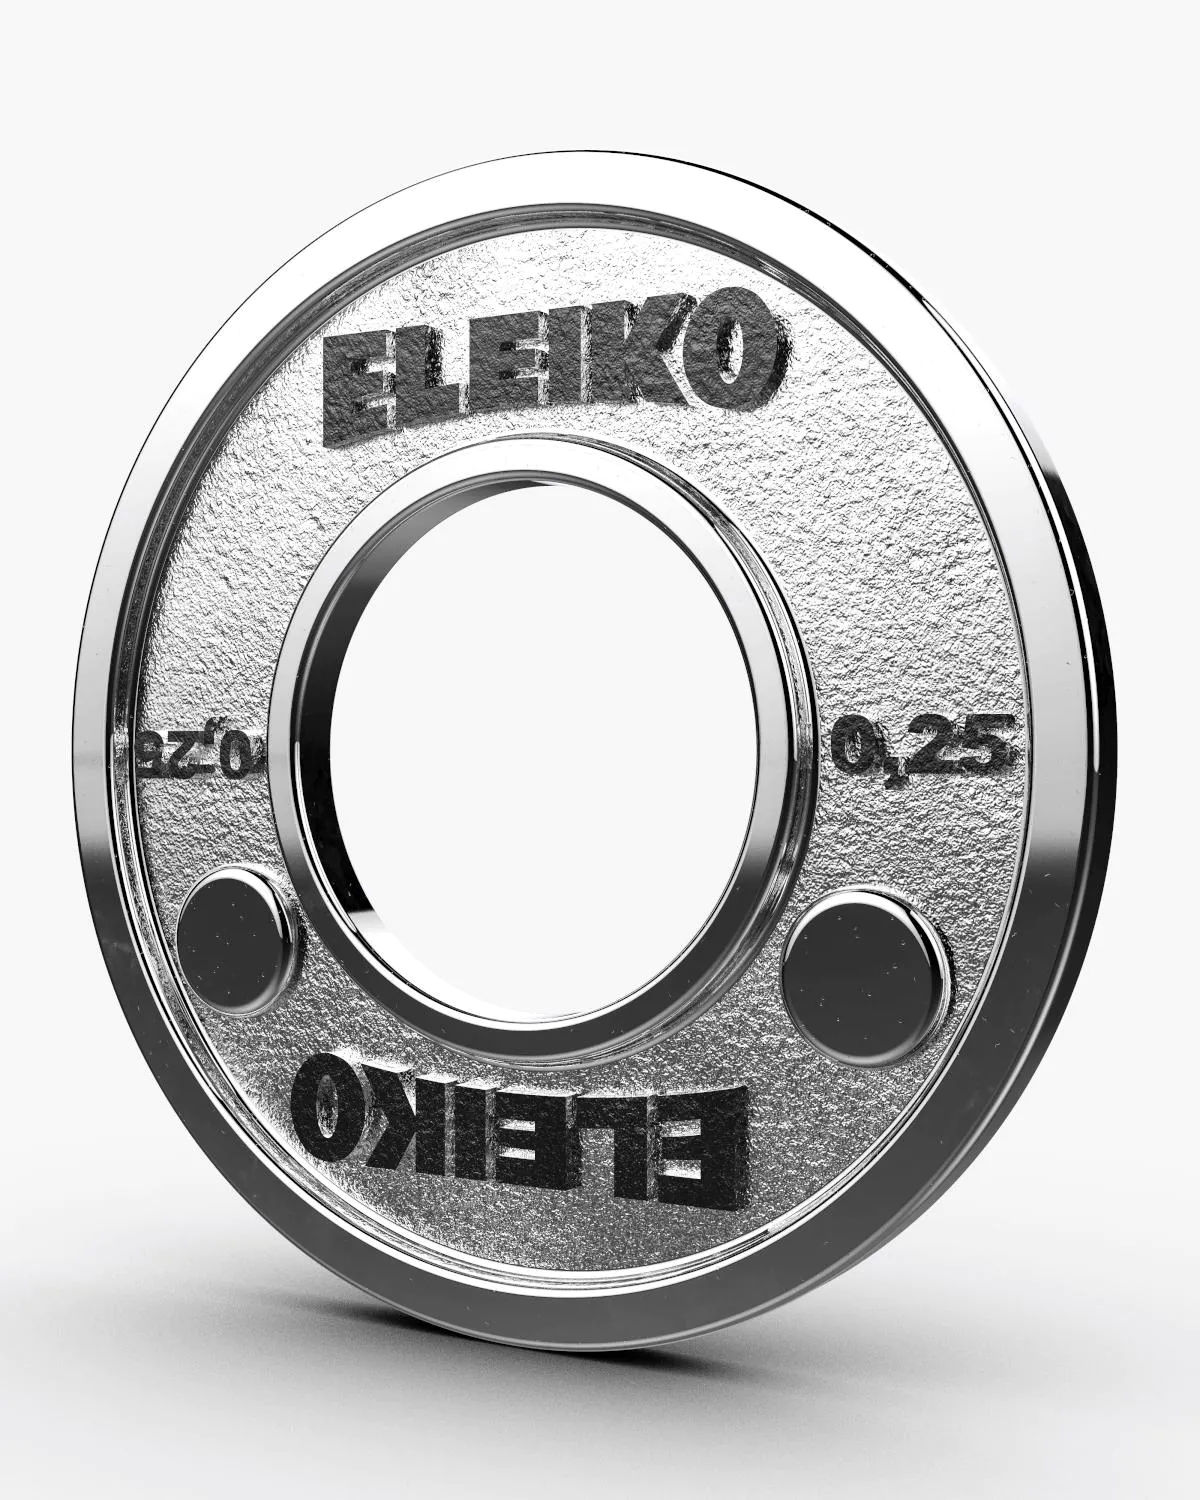 Competition change. Блин для штанги Eleiko 25 kg. Eleiko 0.25. Eleiko IPF. Диски для штанги Элейко.